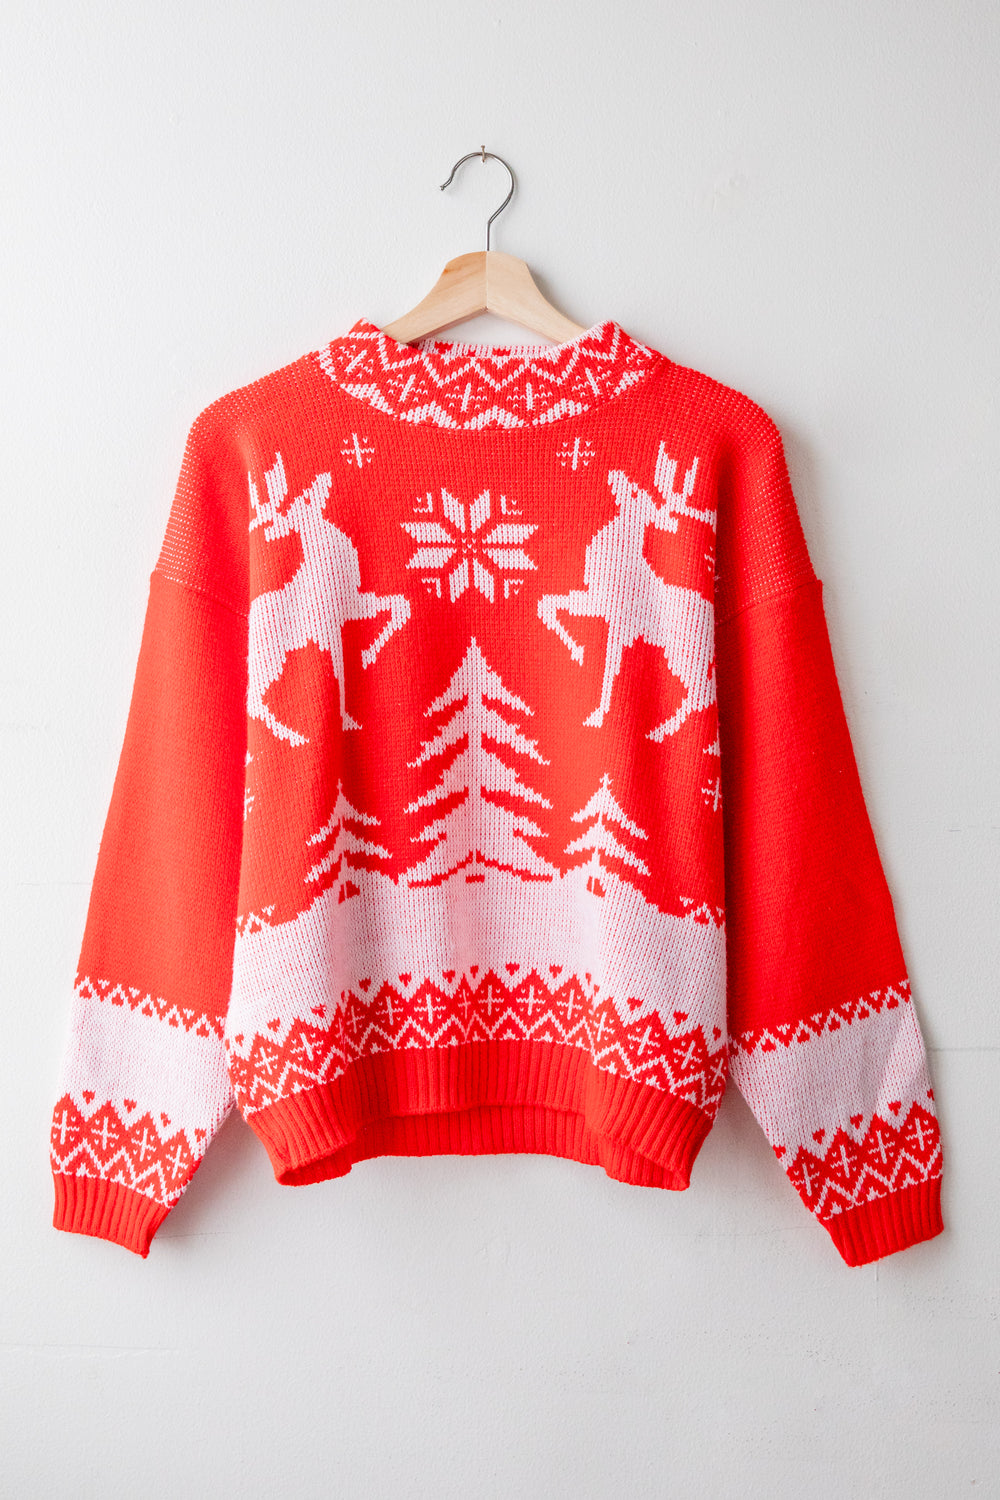 Red Reindeer Christmas Sweater